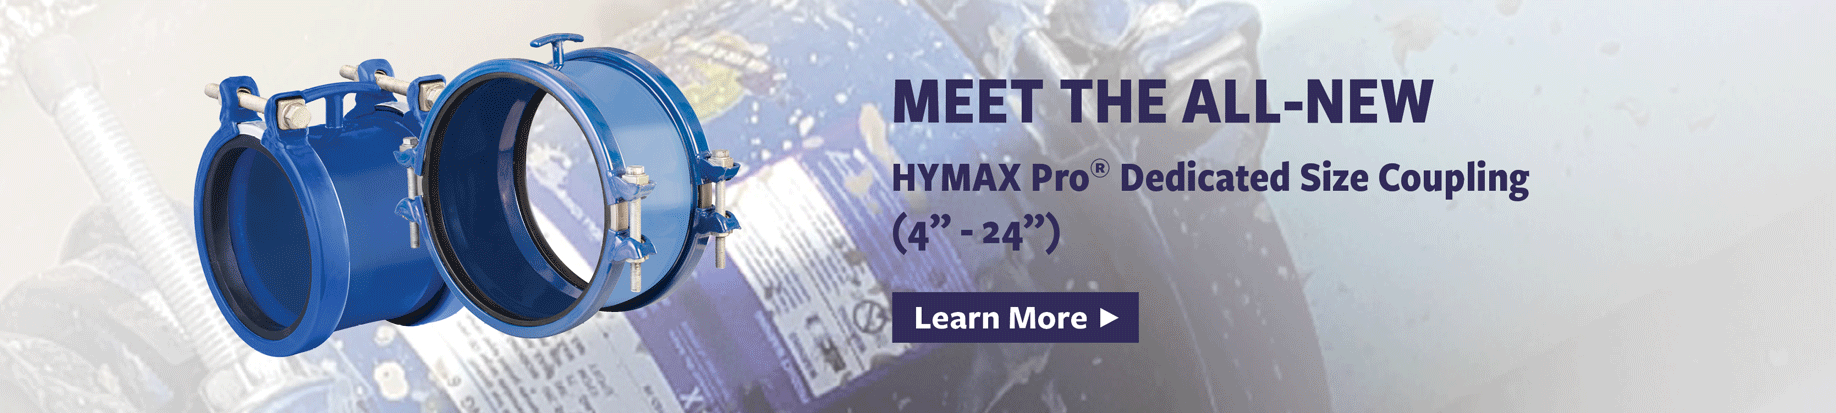 HYMAX Pro Banner